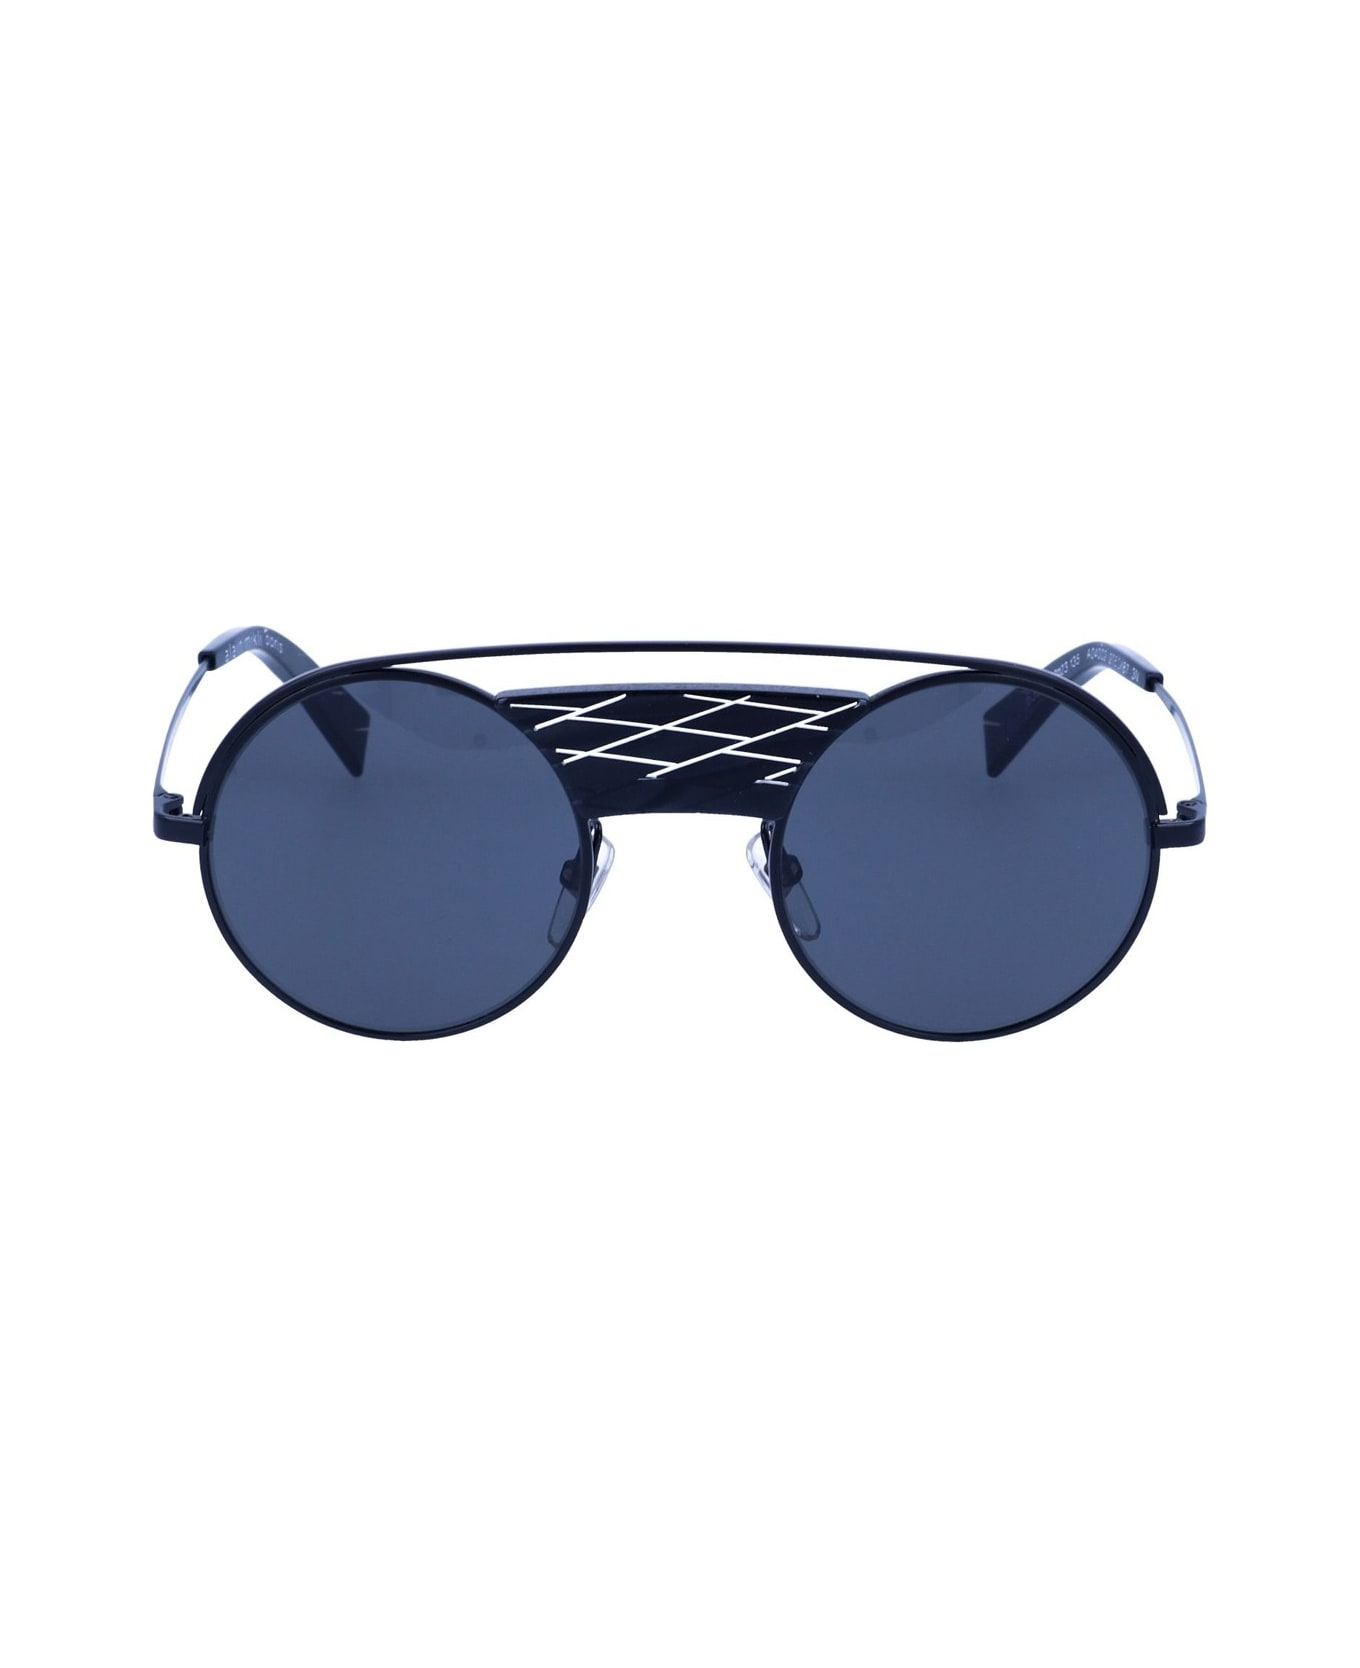 Alain Mikli 0a04002 Sunglasses - Blu